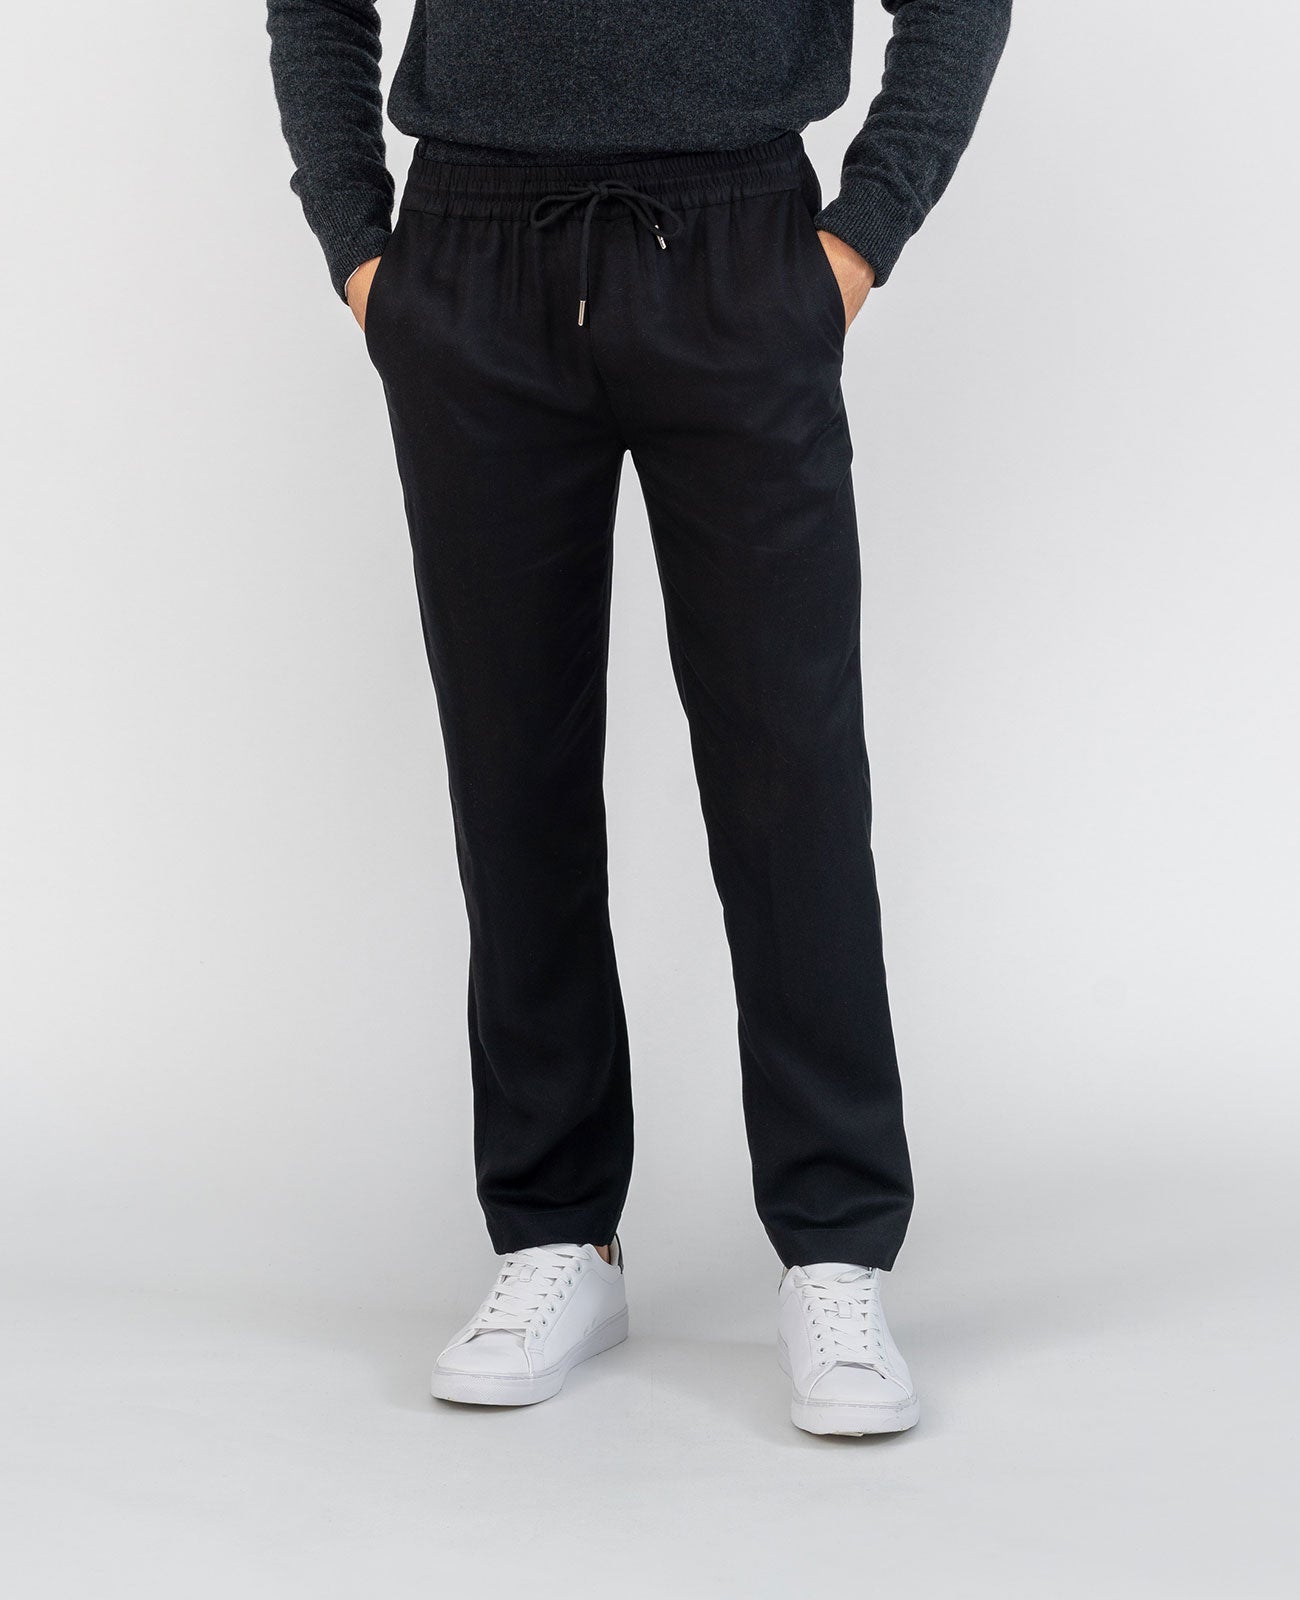 Jogging trousers, wool/tencel, black (M-XL)